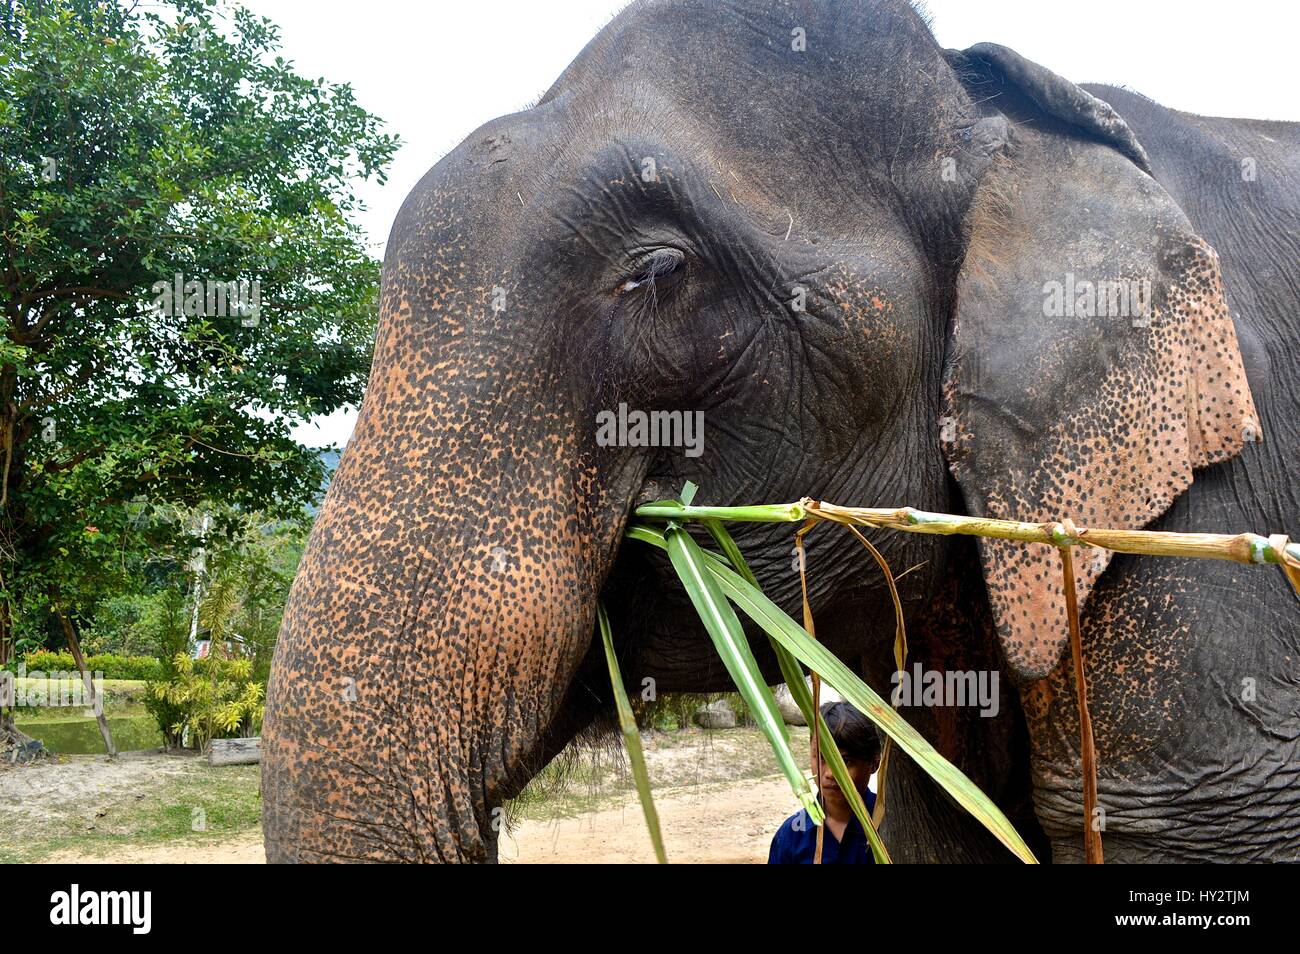 Elderly Asian bull elephant at a sanctuary Stock Photo